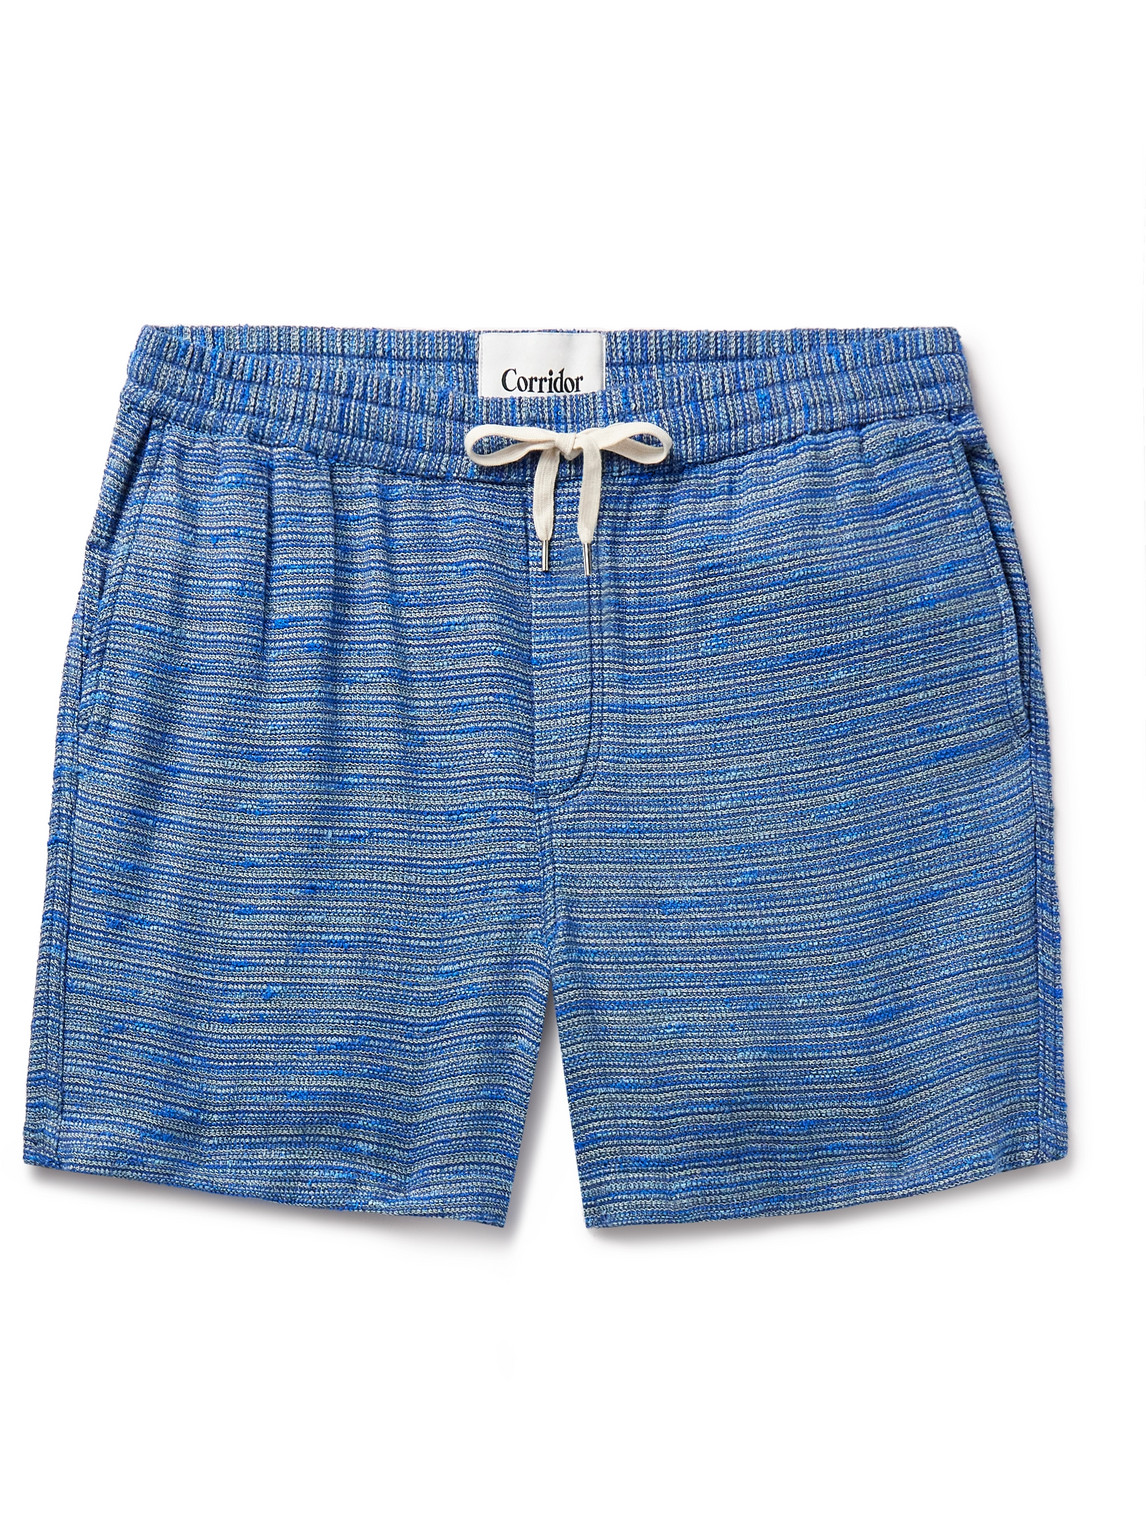 Corridor - Surf Straight-Leg Striped Cotton-Blend Jacquard Drawstring Shorts - Men - Blue - M von Corridor